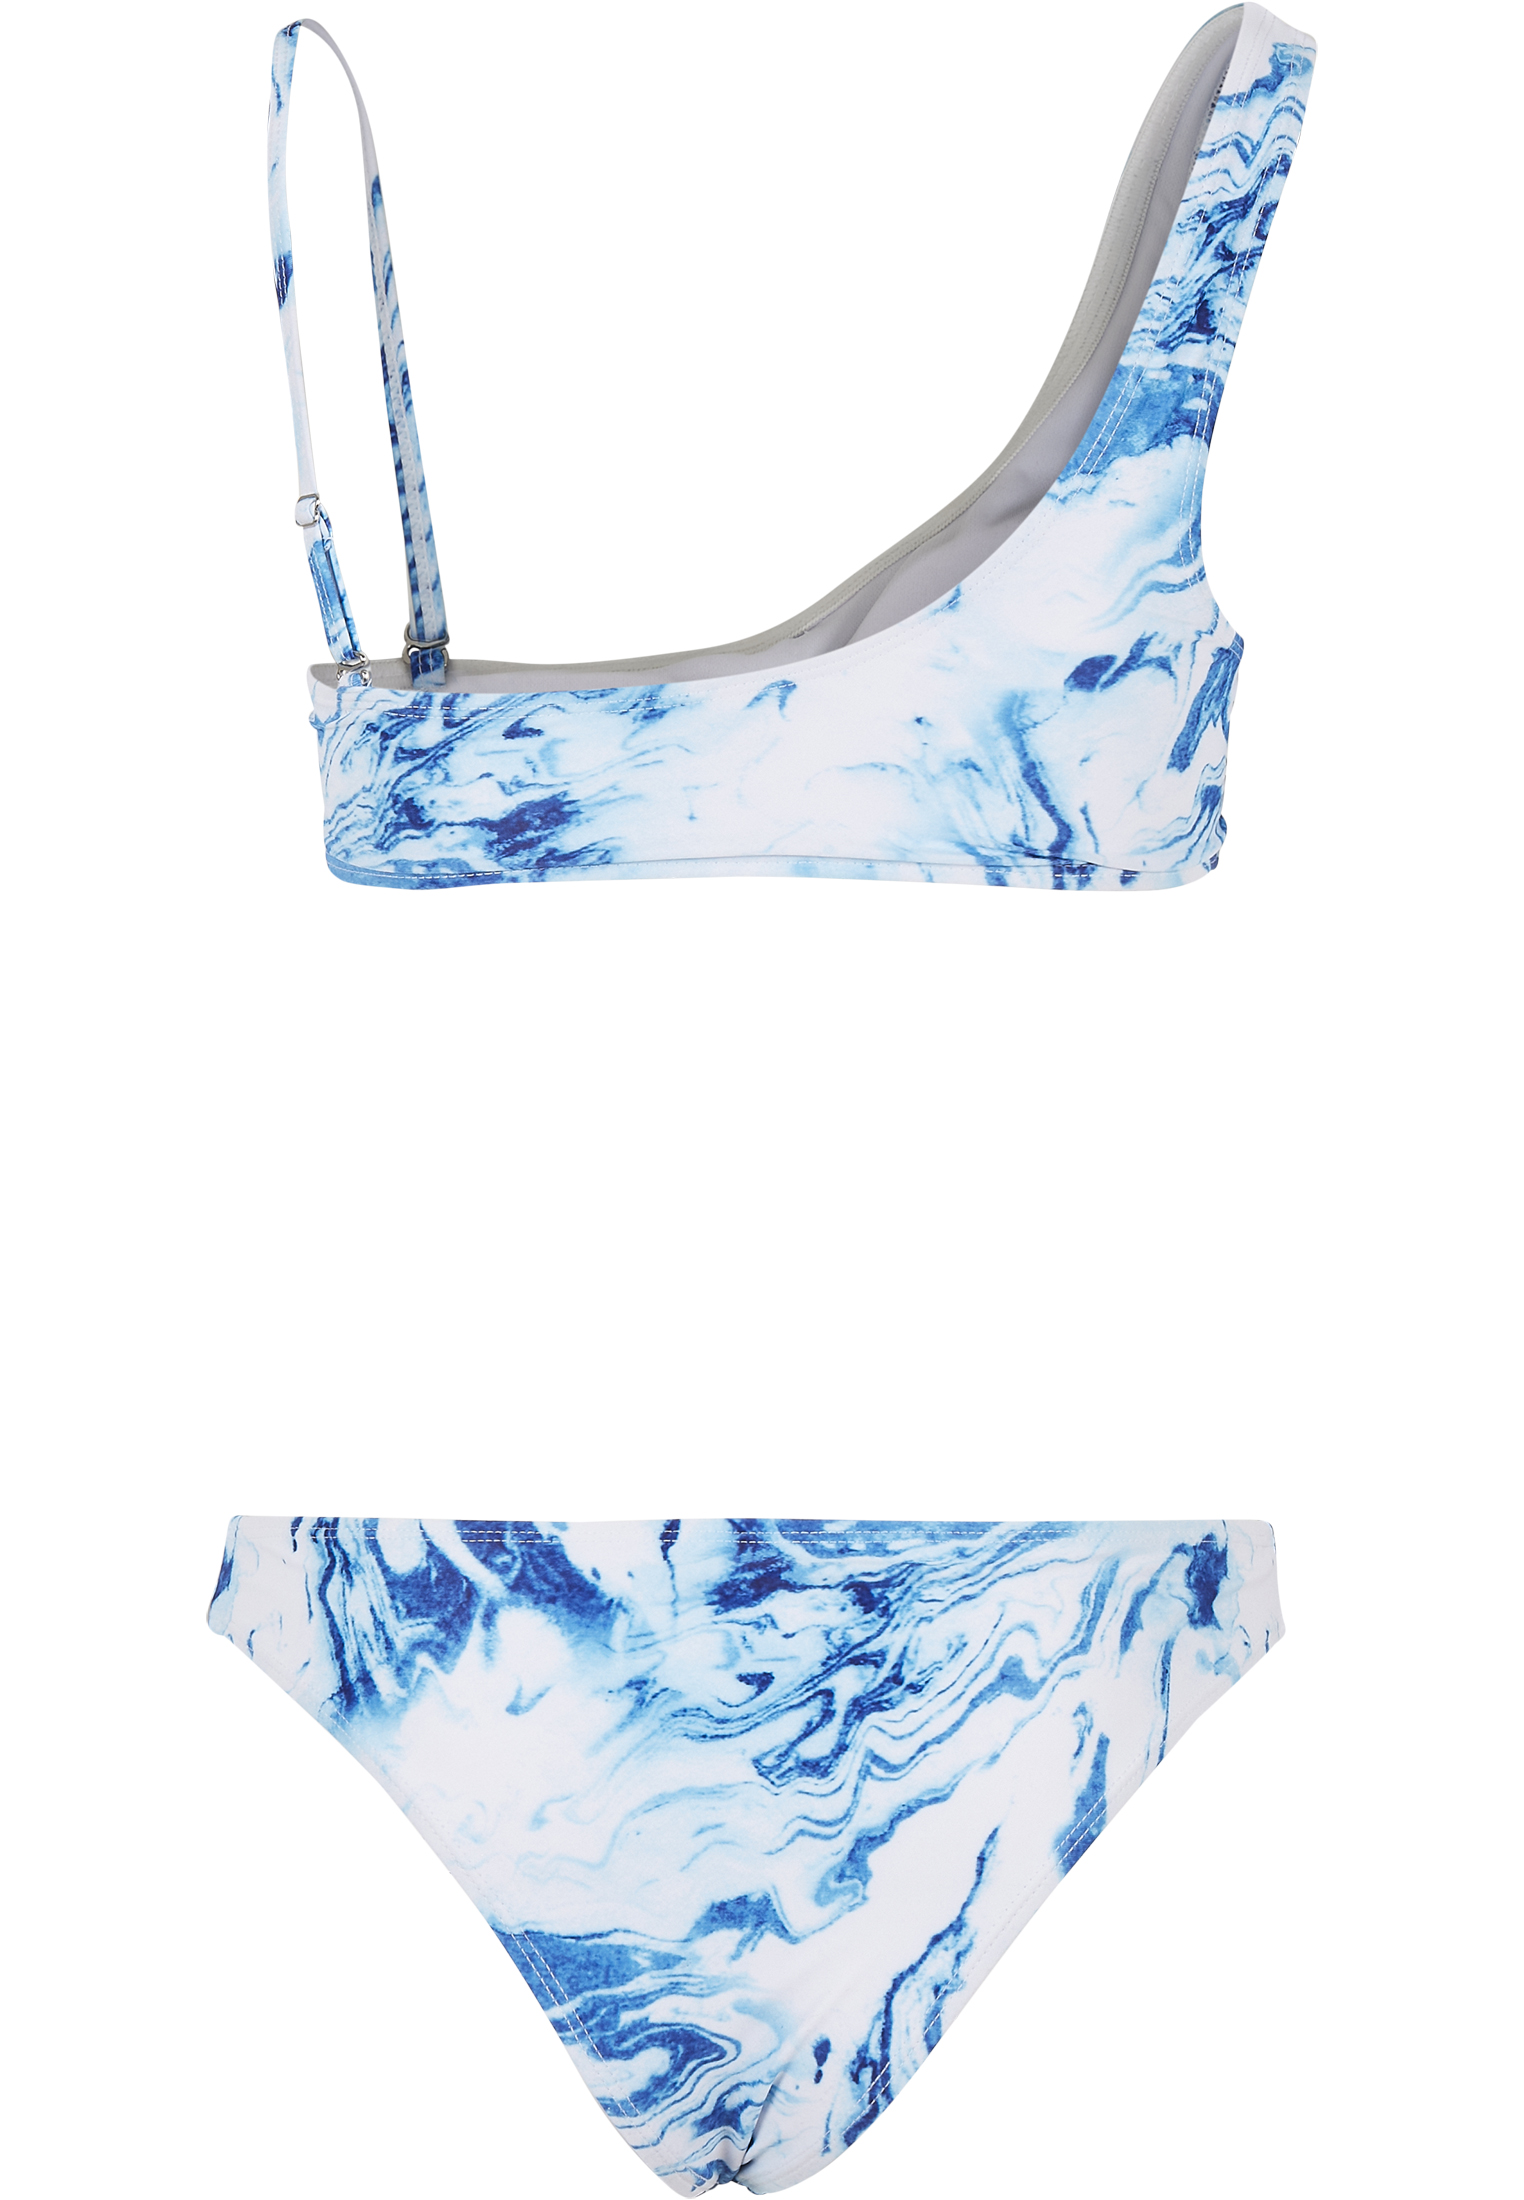 Bademode Ladies Asymmetric Tank Top Bikini in Farbe ocean white